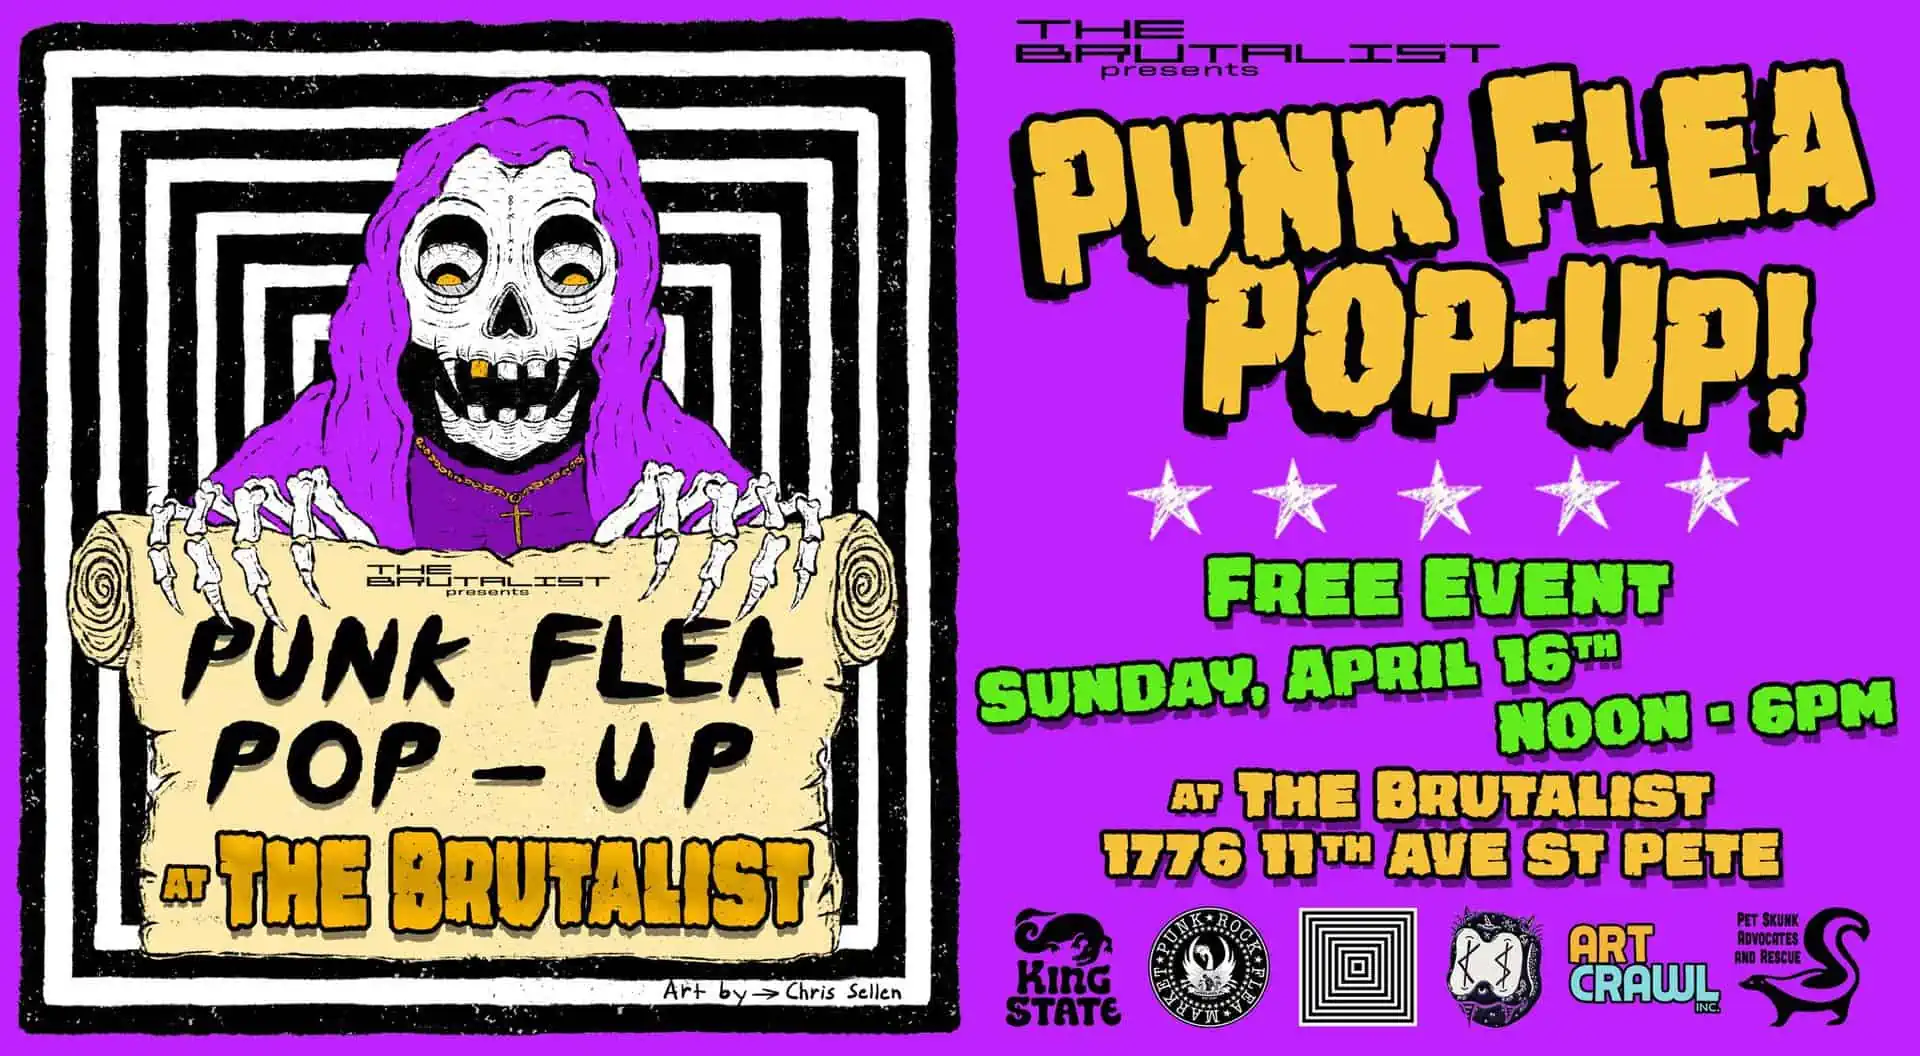 The Brutalist presents: PUNK FLEA POP UP